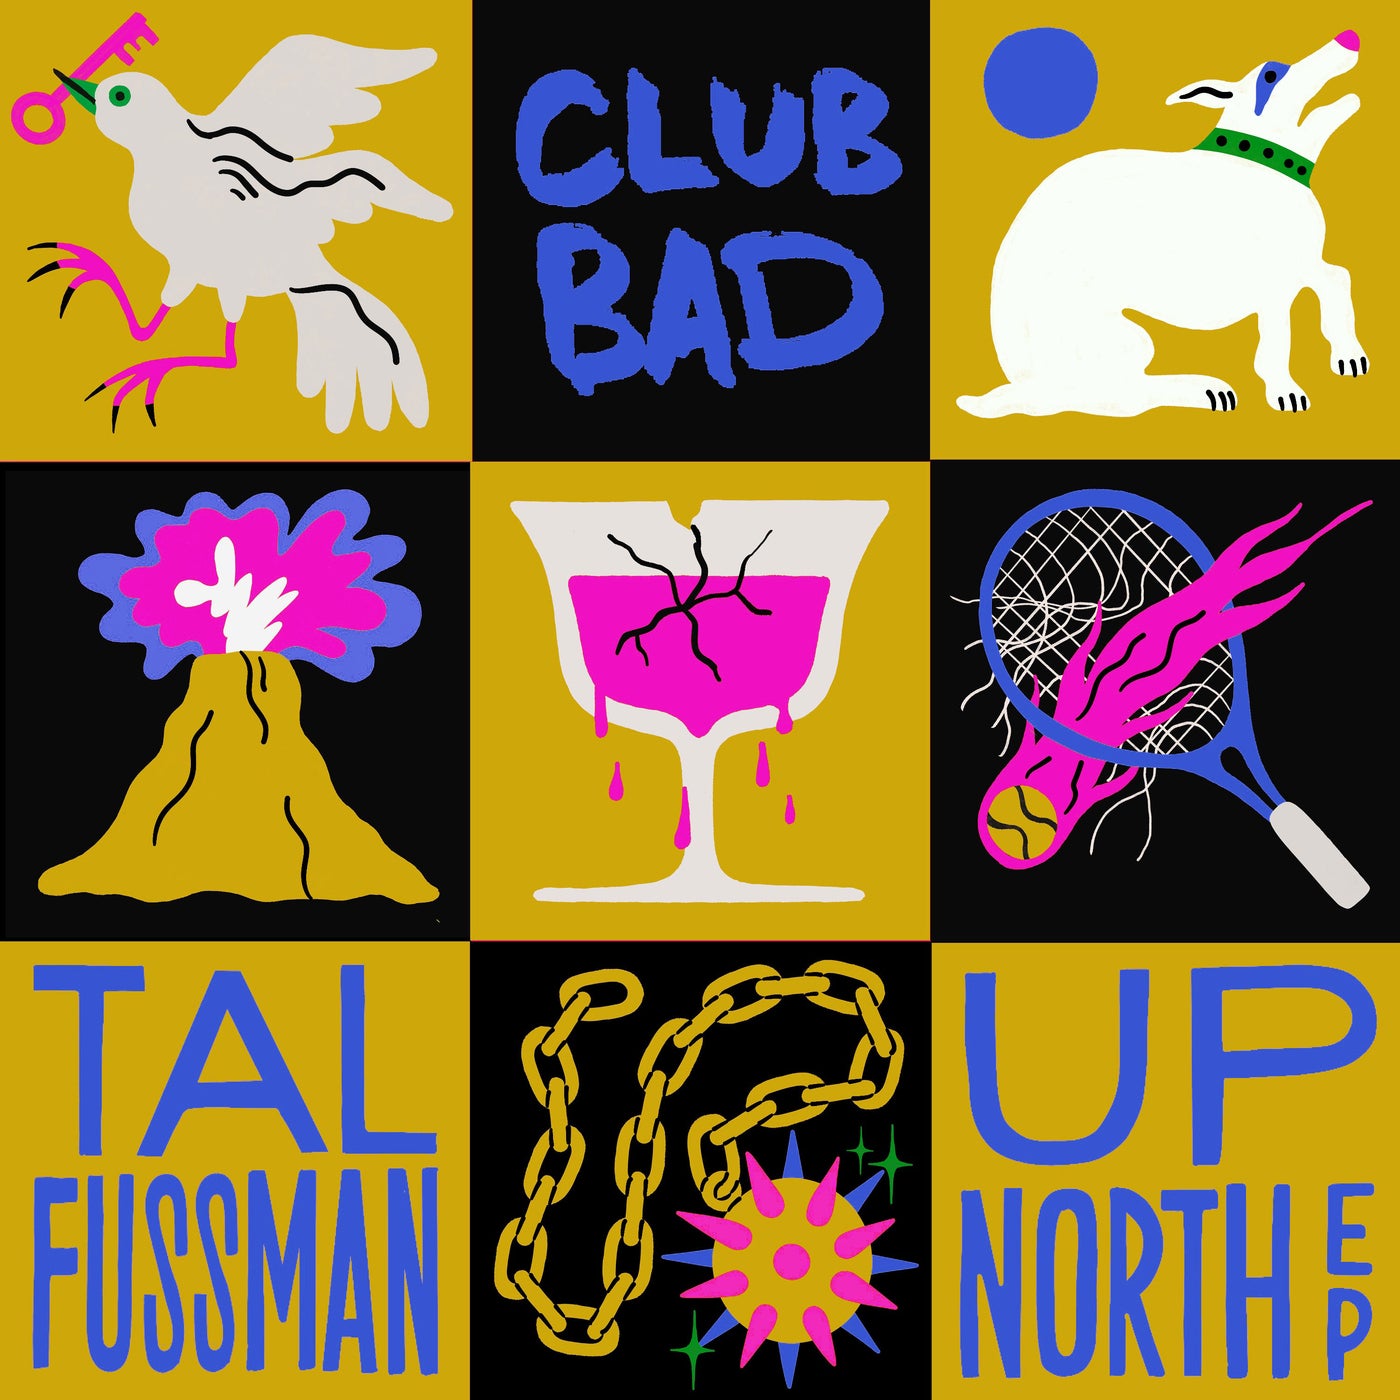 Tal Fussman - Up North EP on Club Bad